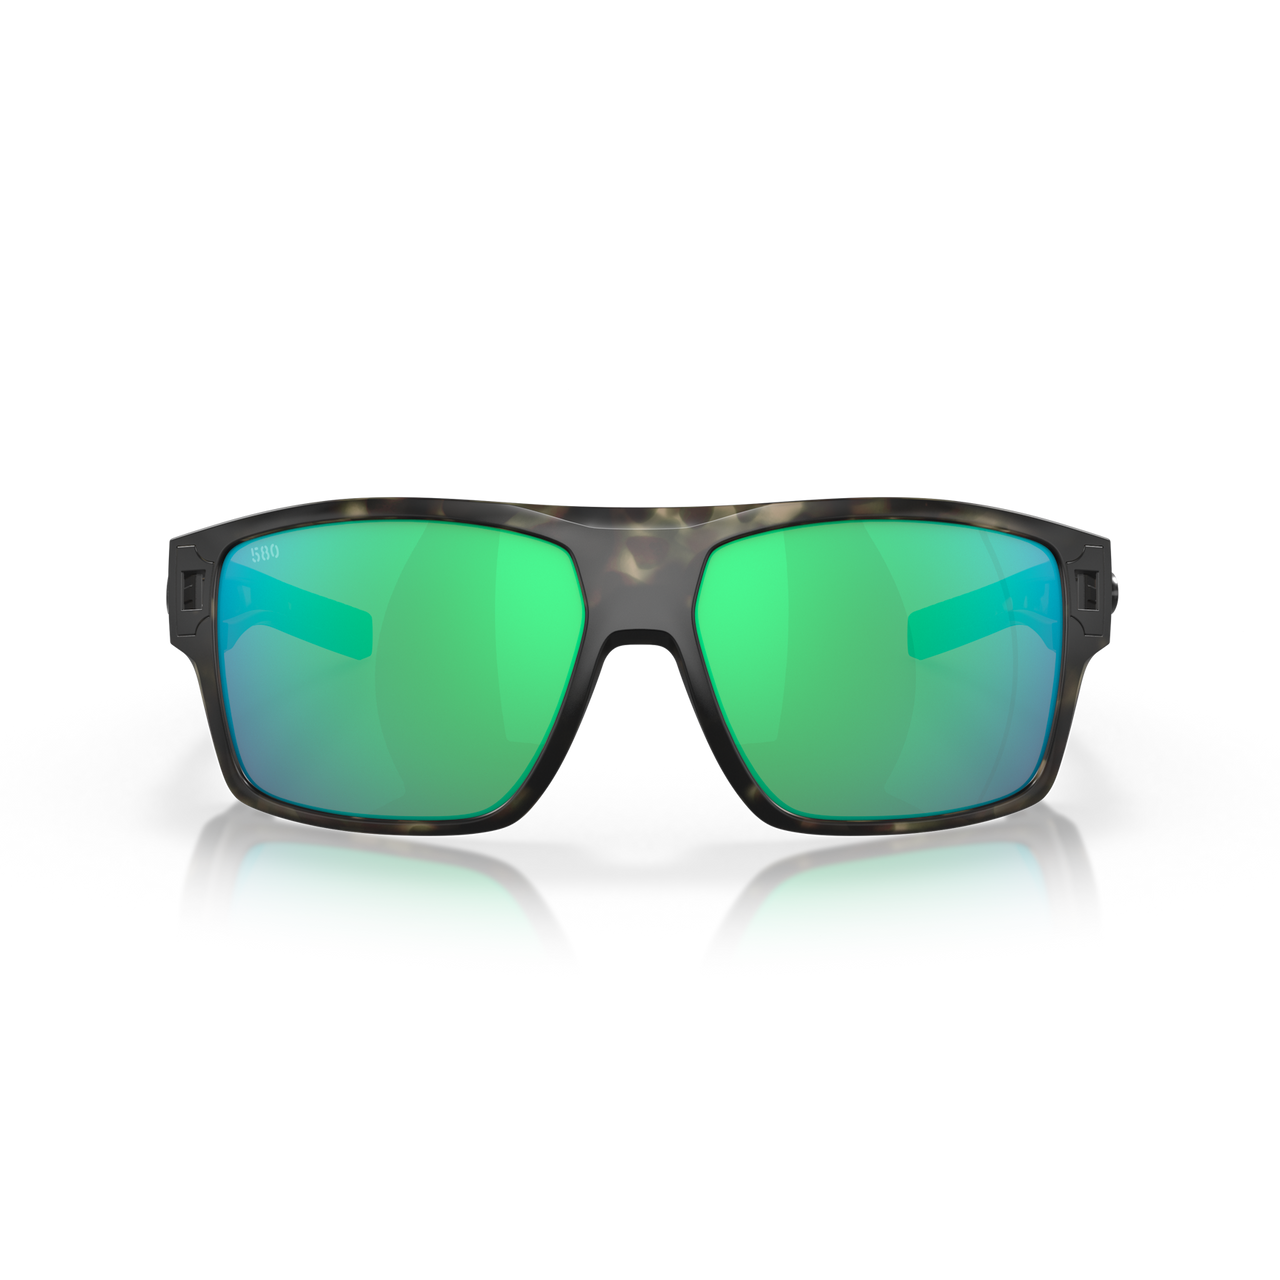 Diego Polarized Sunglasses in Green Mirror